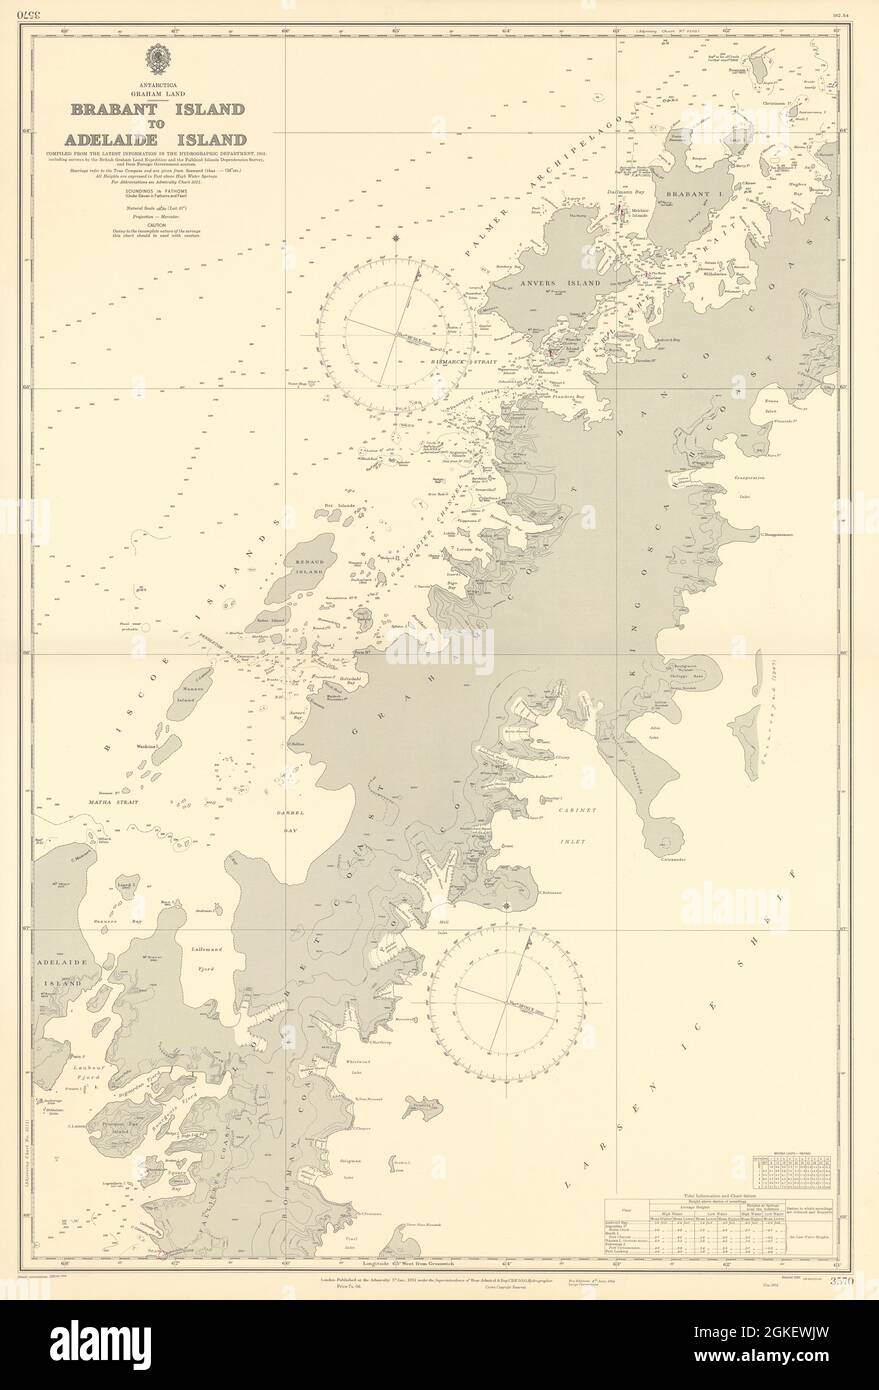 Antarctica Graham Land Brabant-Adelaide Island ADMIRALTY chart 1951 (1955) map Stock Photo